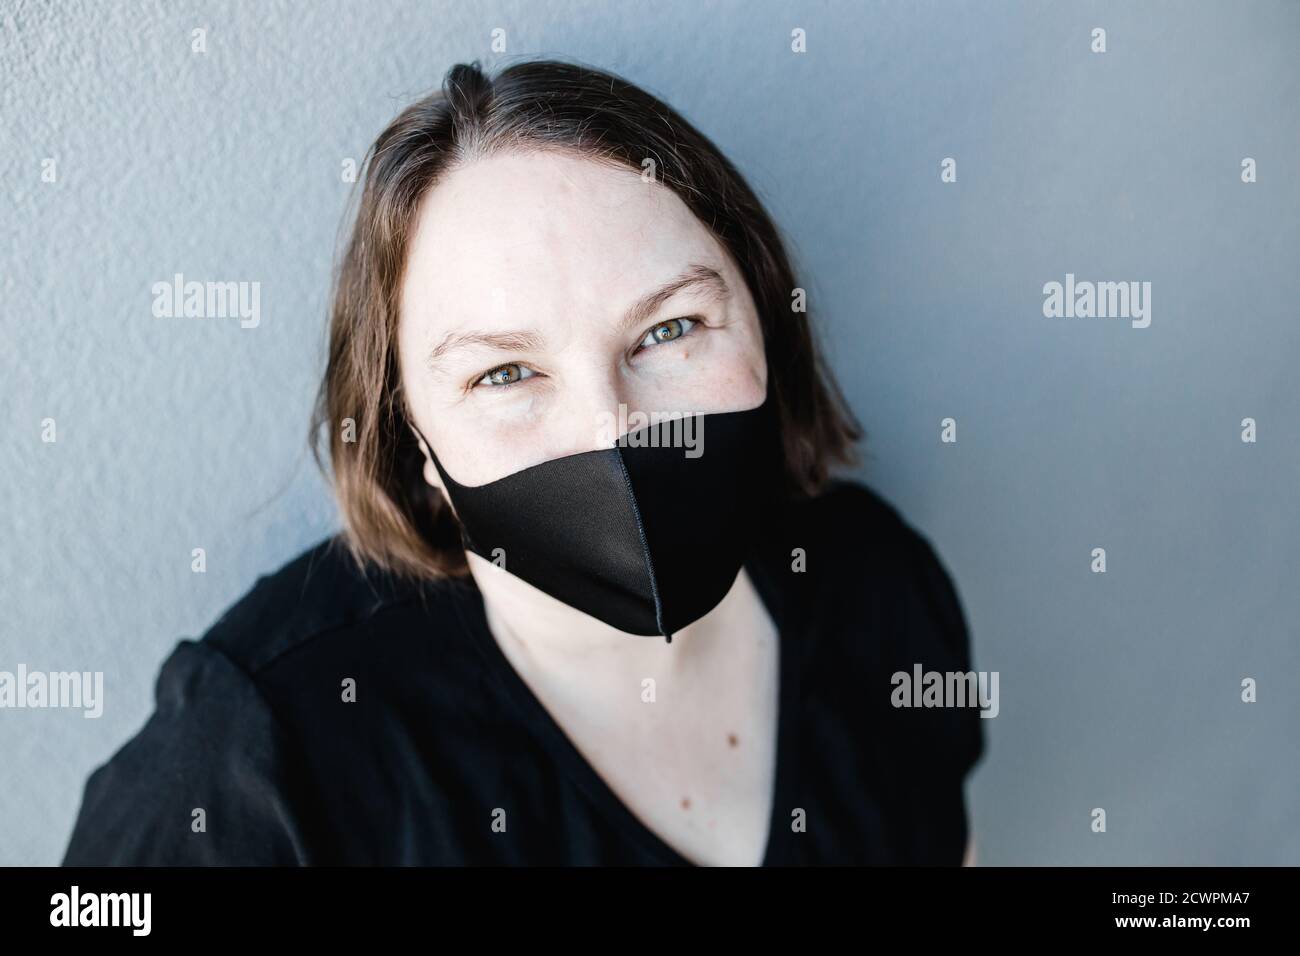 Caucasian woman wearing a black mask during the COVID-19 Coronavirus pandemic Stock Photo